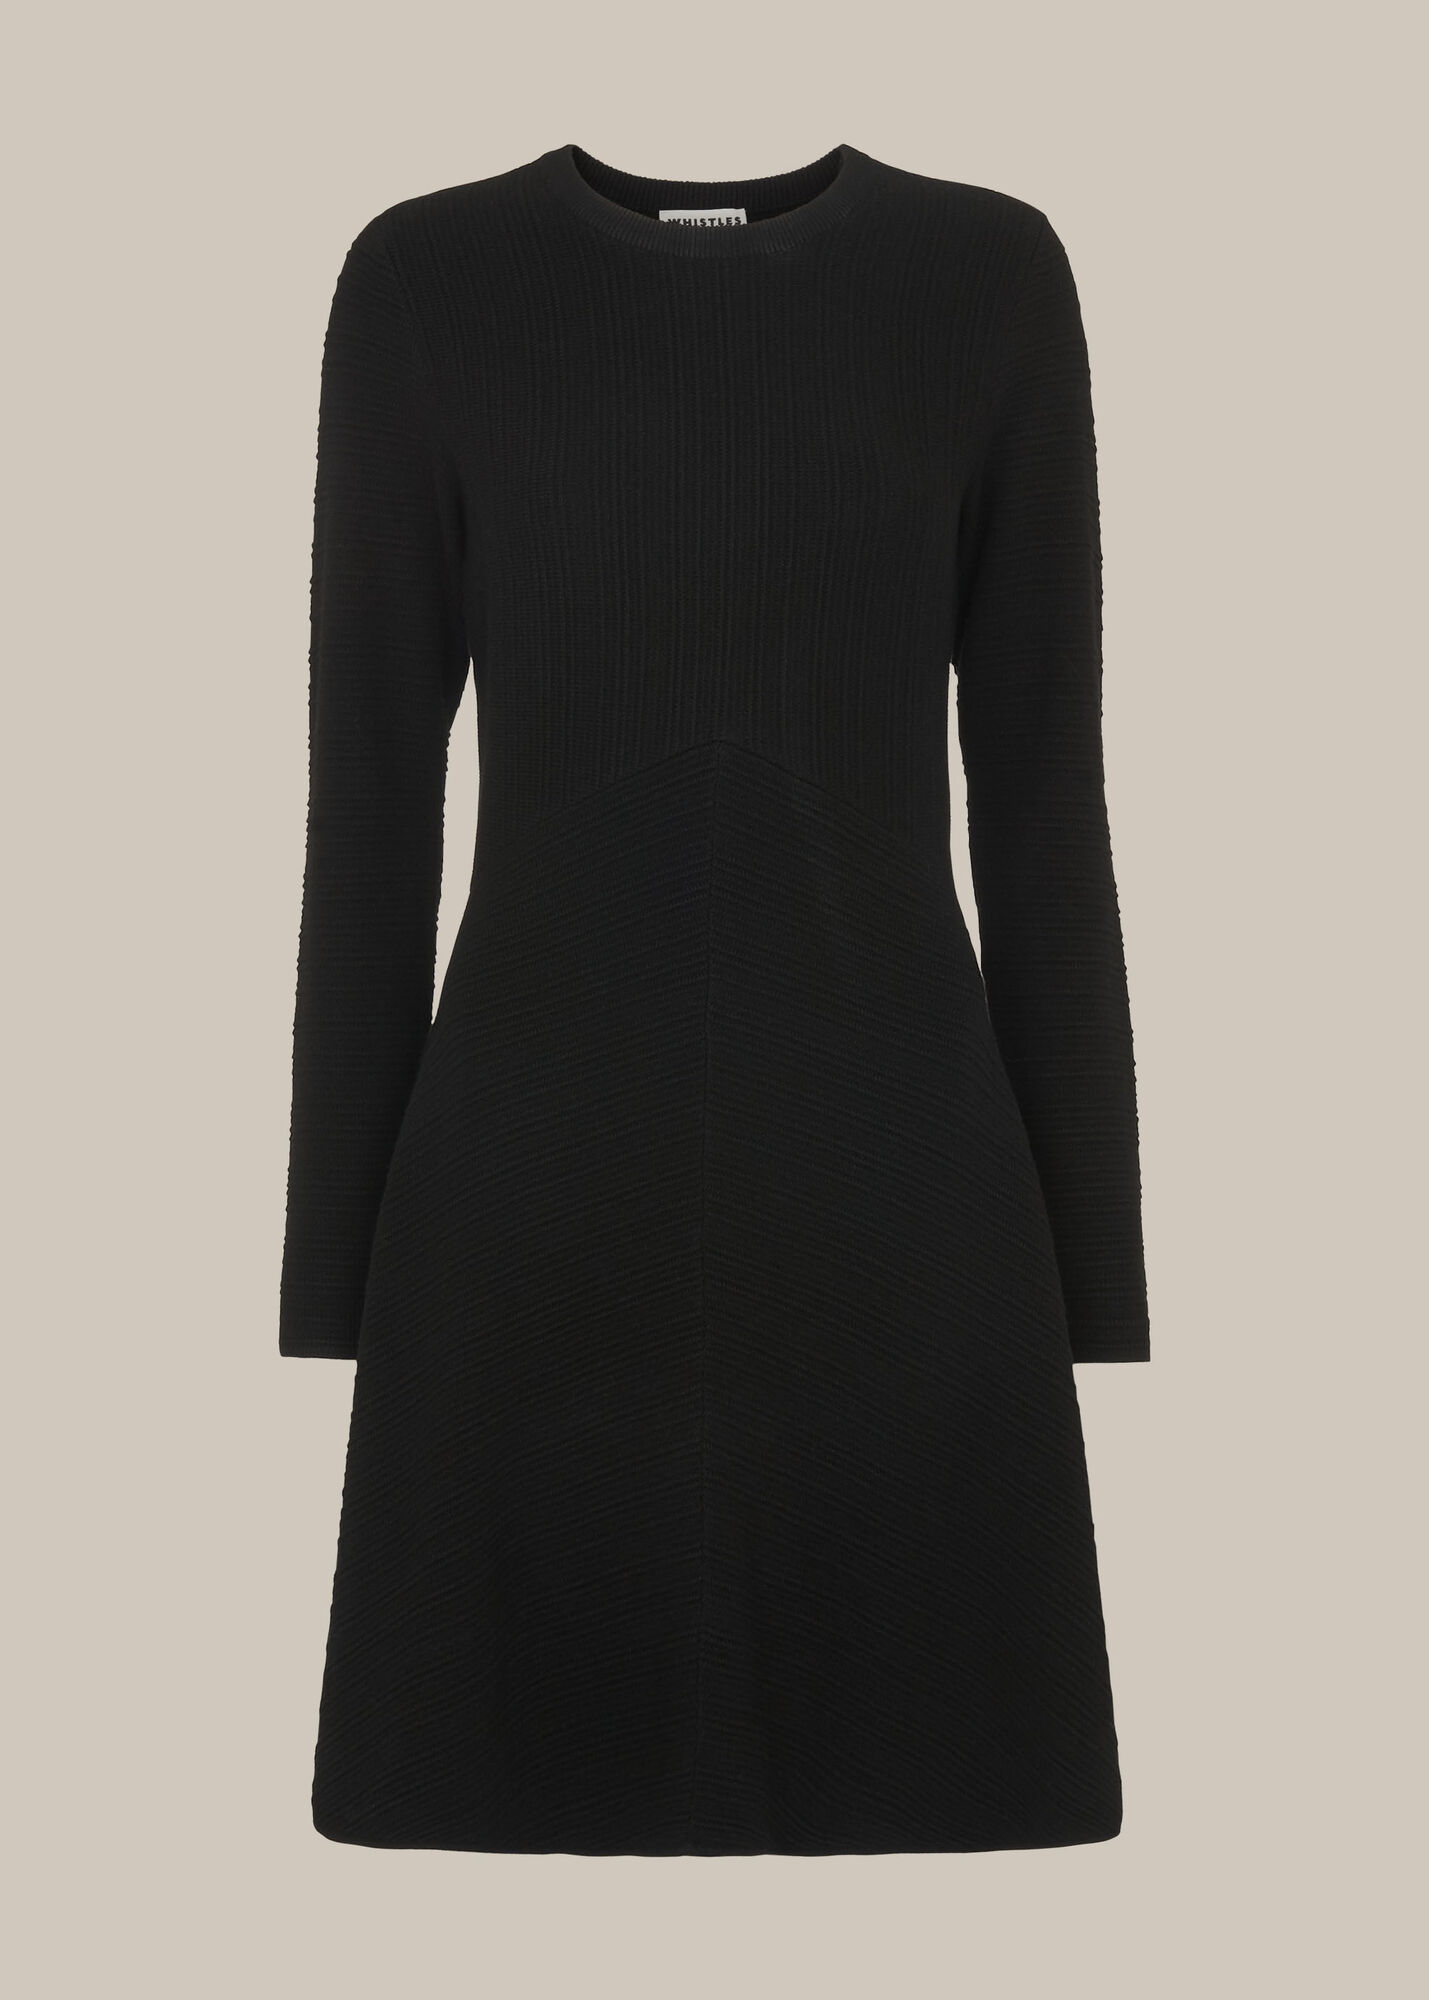 Black Ottoman Knitted Flippy Dress | WHISTLES